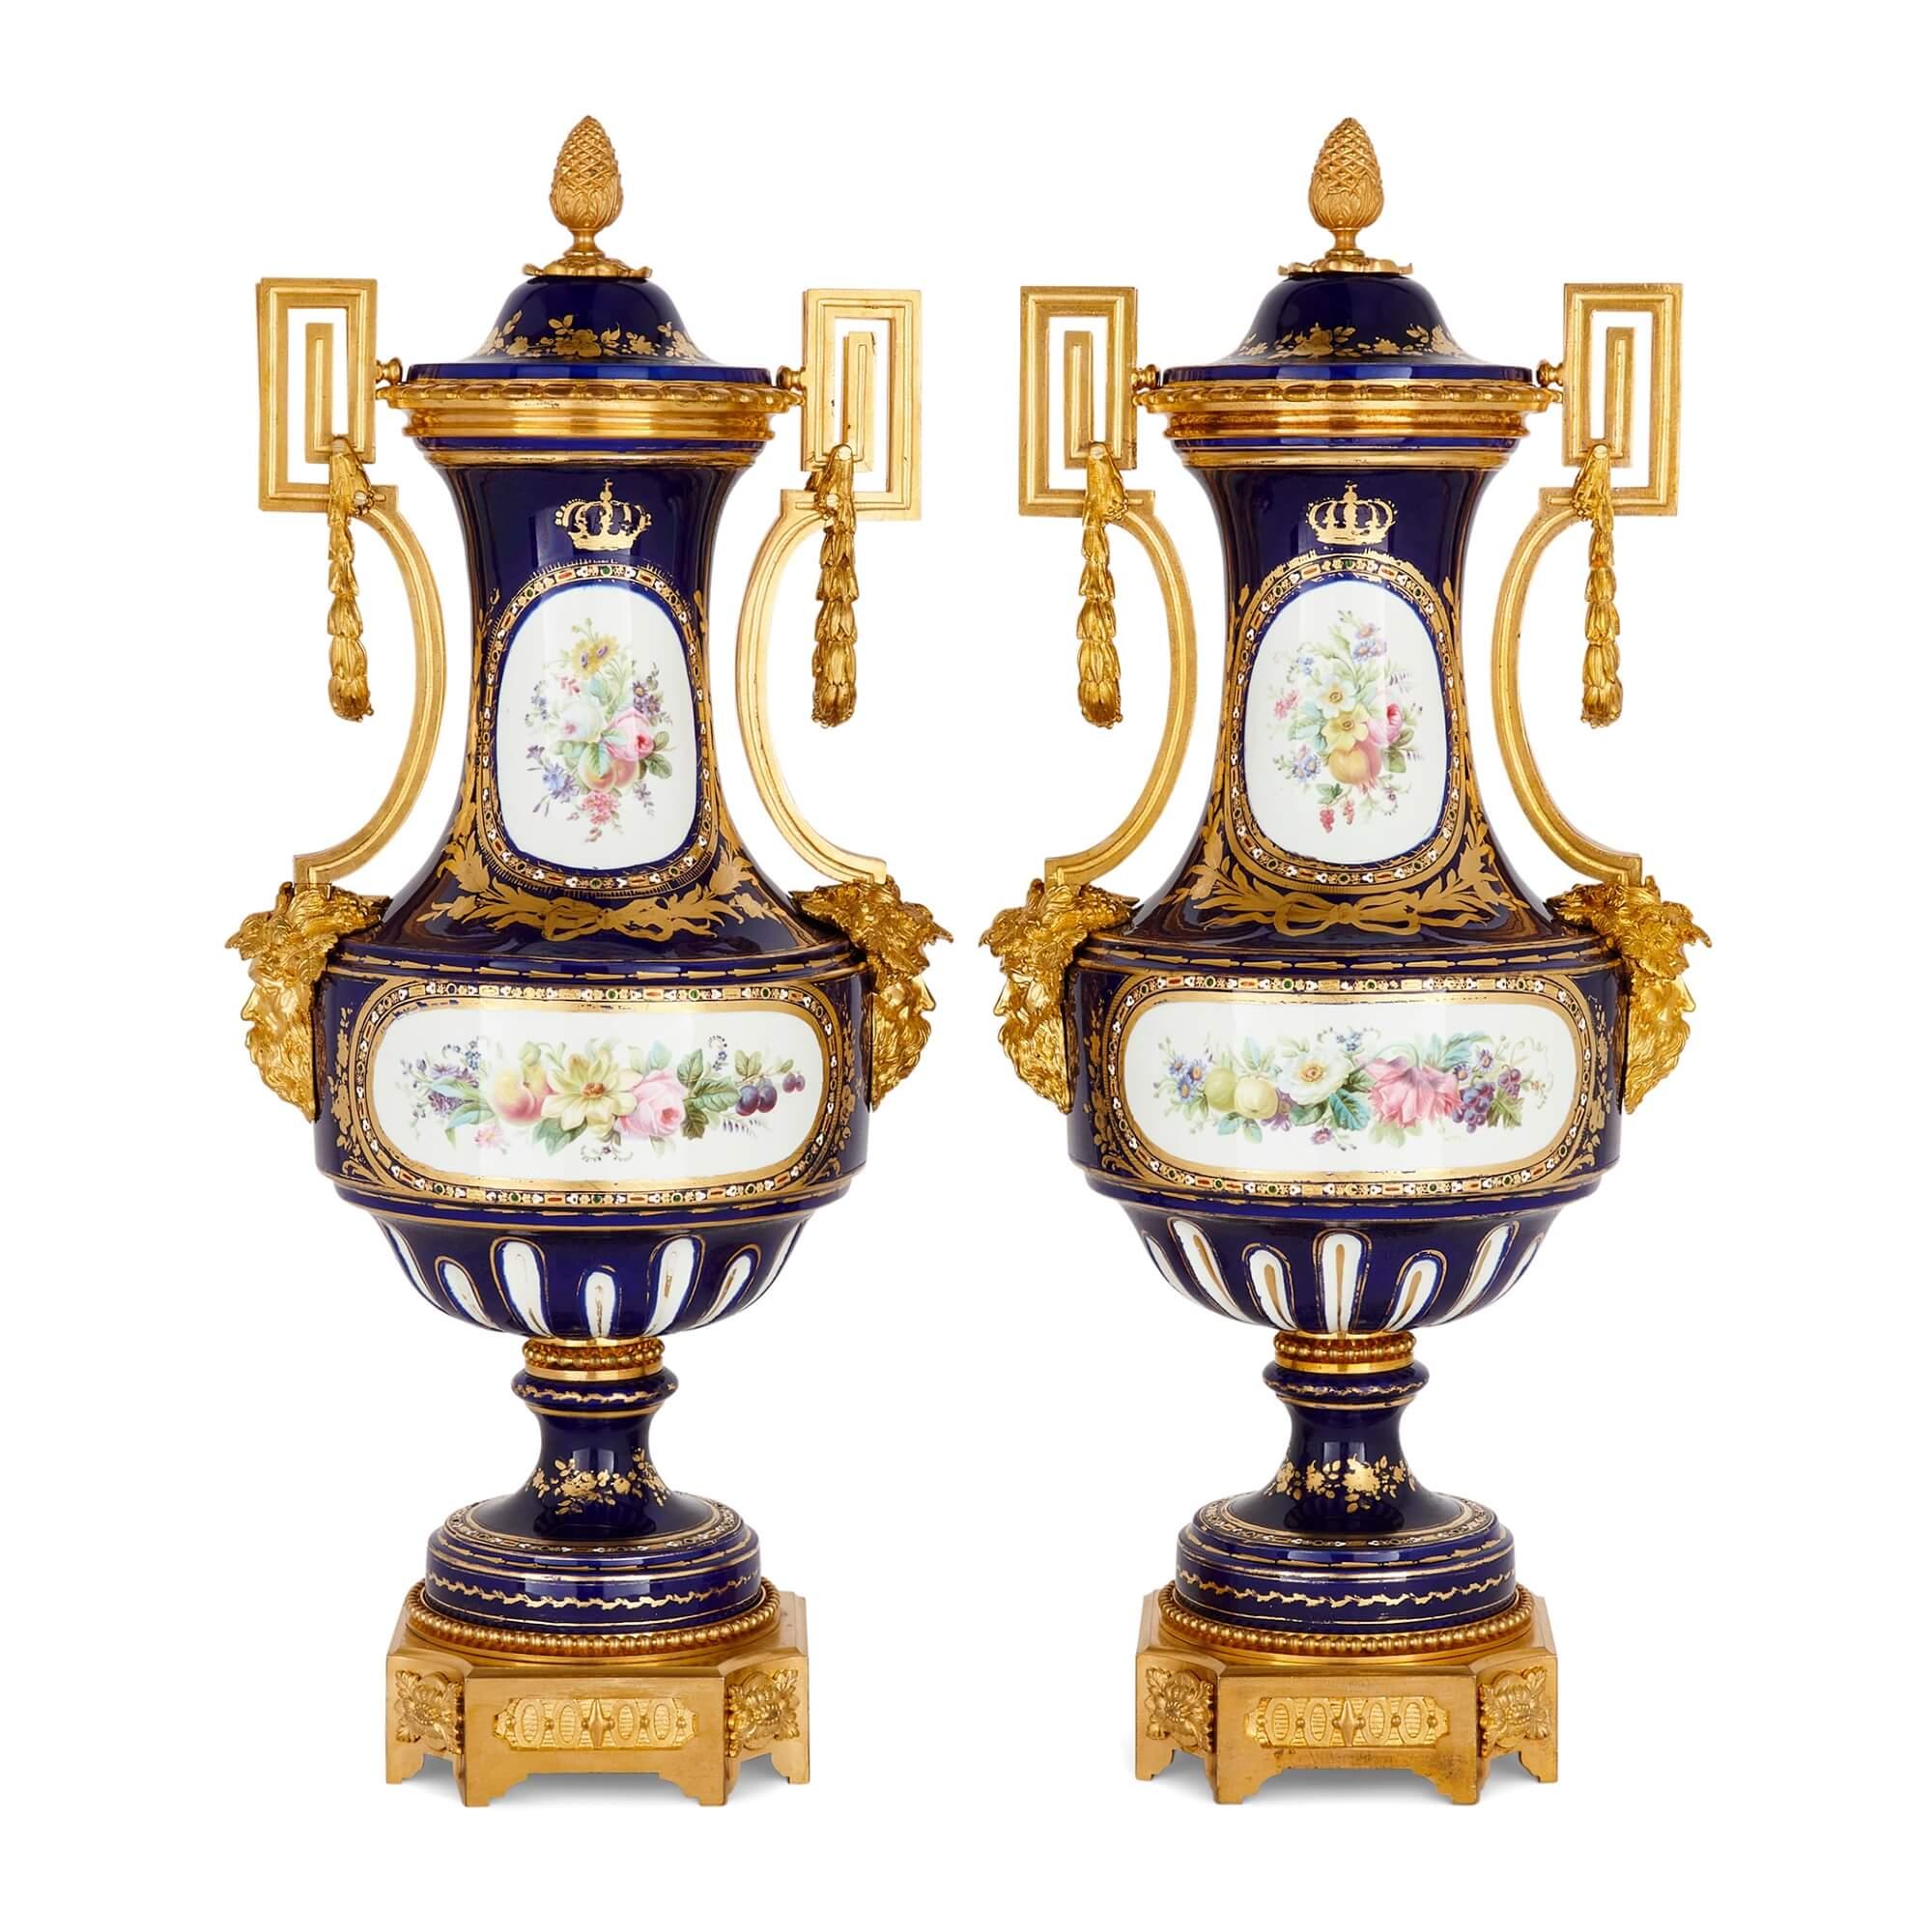 Cast Pair of Large Ormolu Mounted Cobalt-Blue Ground Jewelled Porcelain Vases For Sale